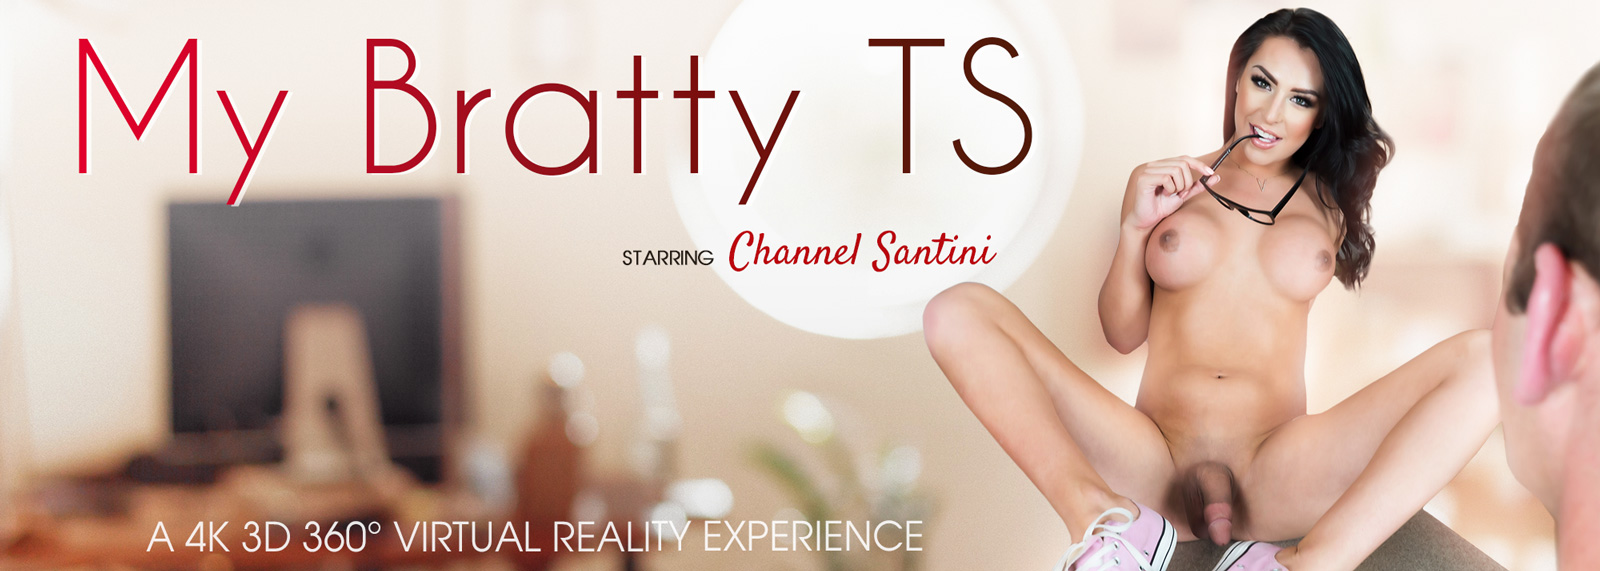 My Bratty TS - VR Porn Video, Starring: Chanel Santini VR